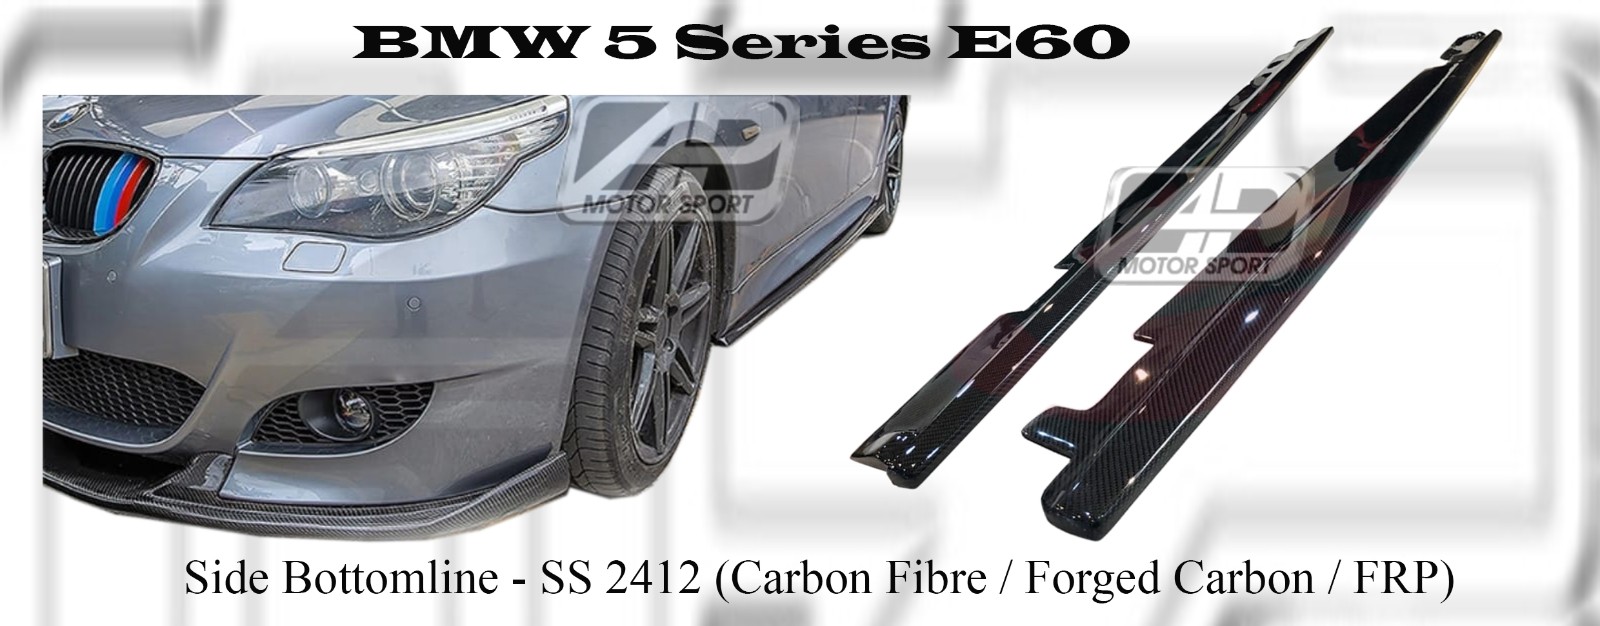 BMW 5 Series E60 Side Bottomline (Carbon Fibre / Forged Carb